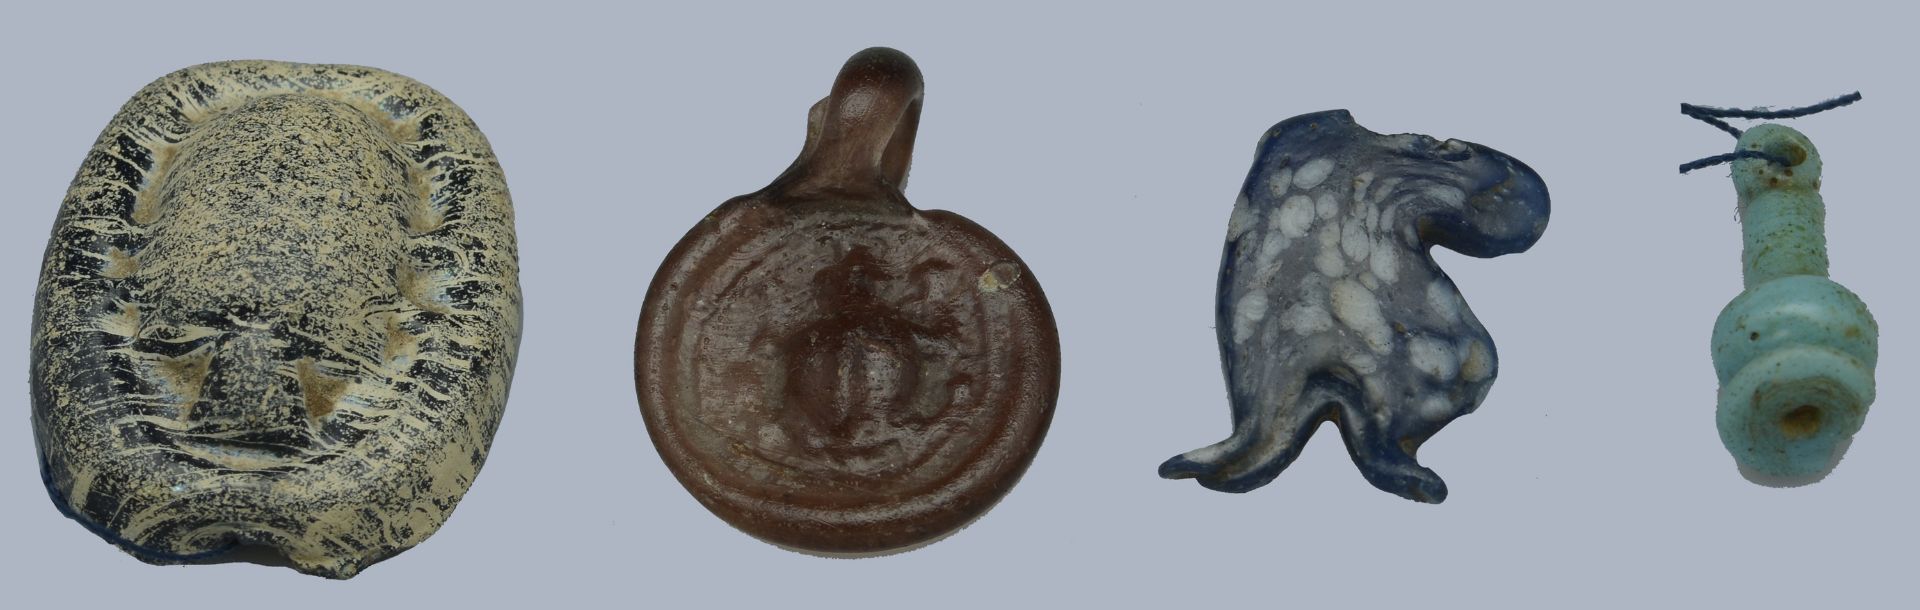 Egypt, New Kingdom (c. 1550-1069 BC), Glass (2), including blue and white Tauret amulet, 18m...